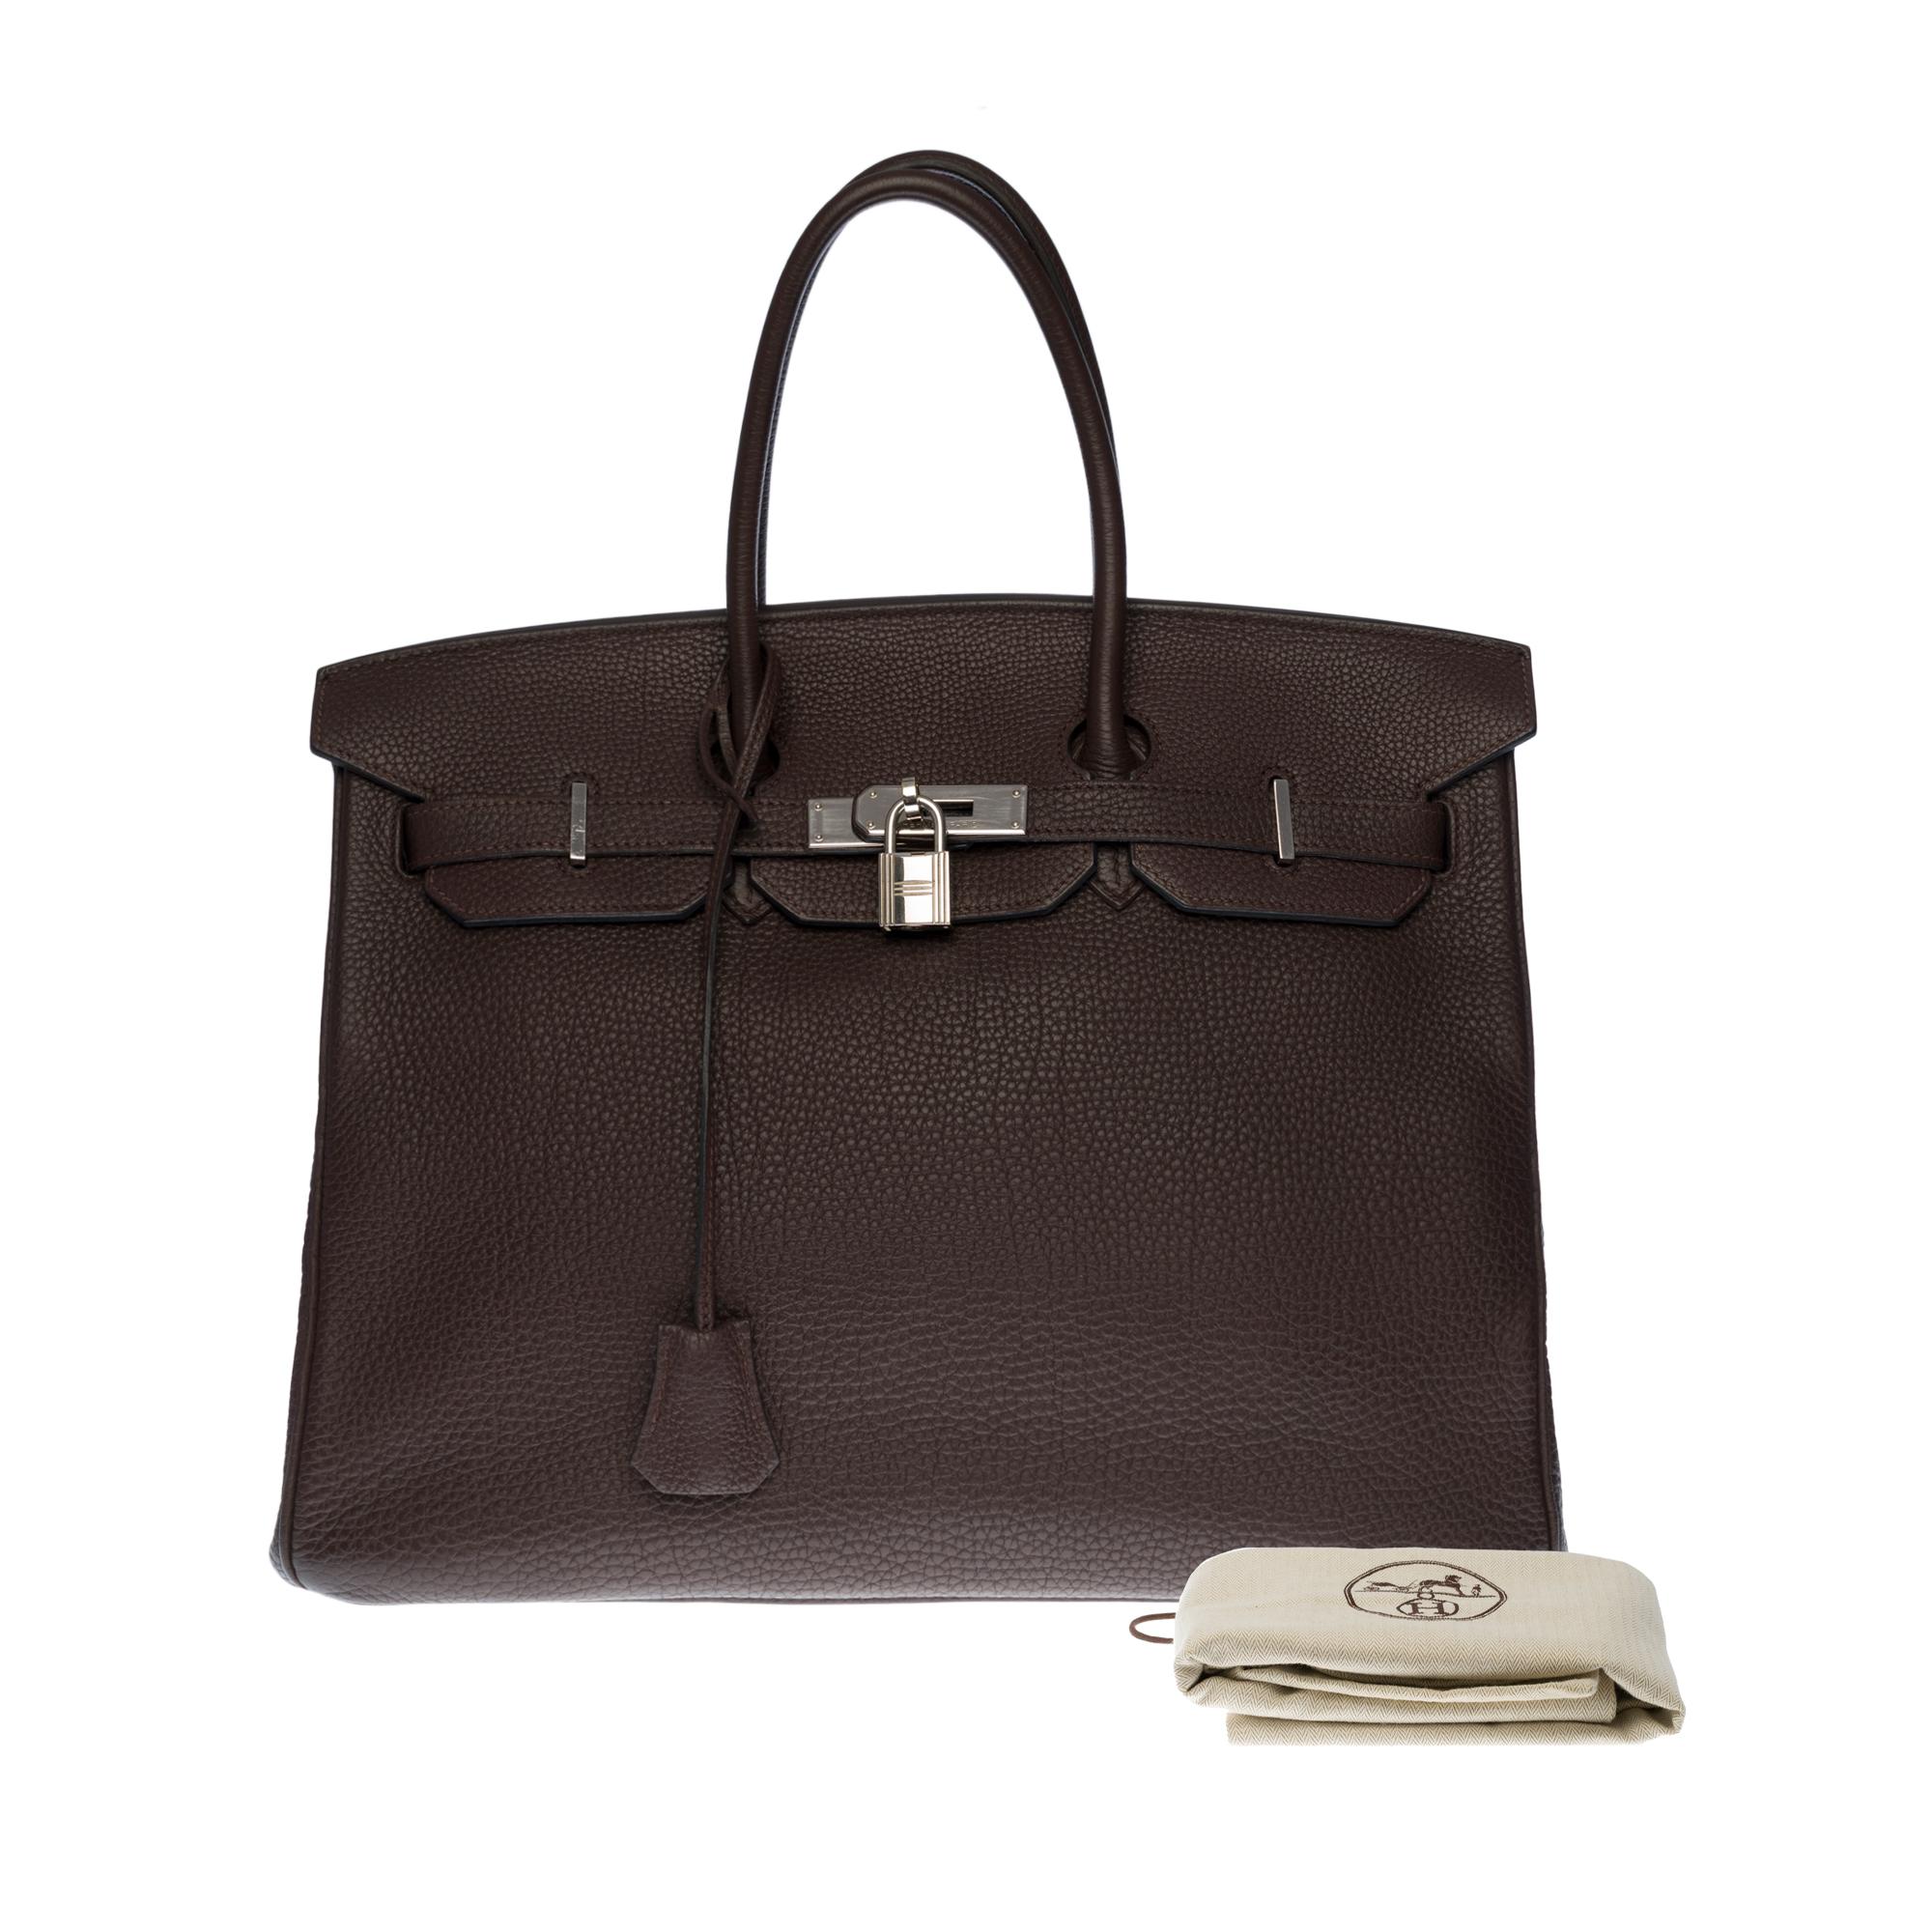 Hermès Birkin 35 handbag in brown Togo leather with silver hardware ! 3